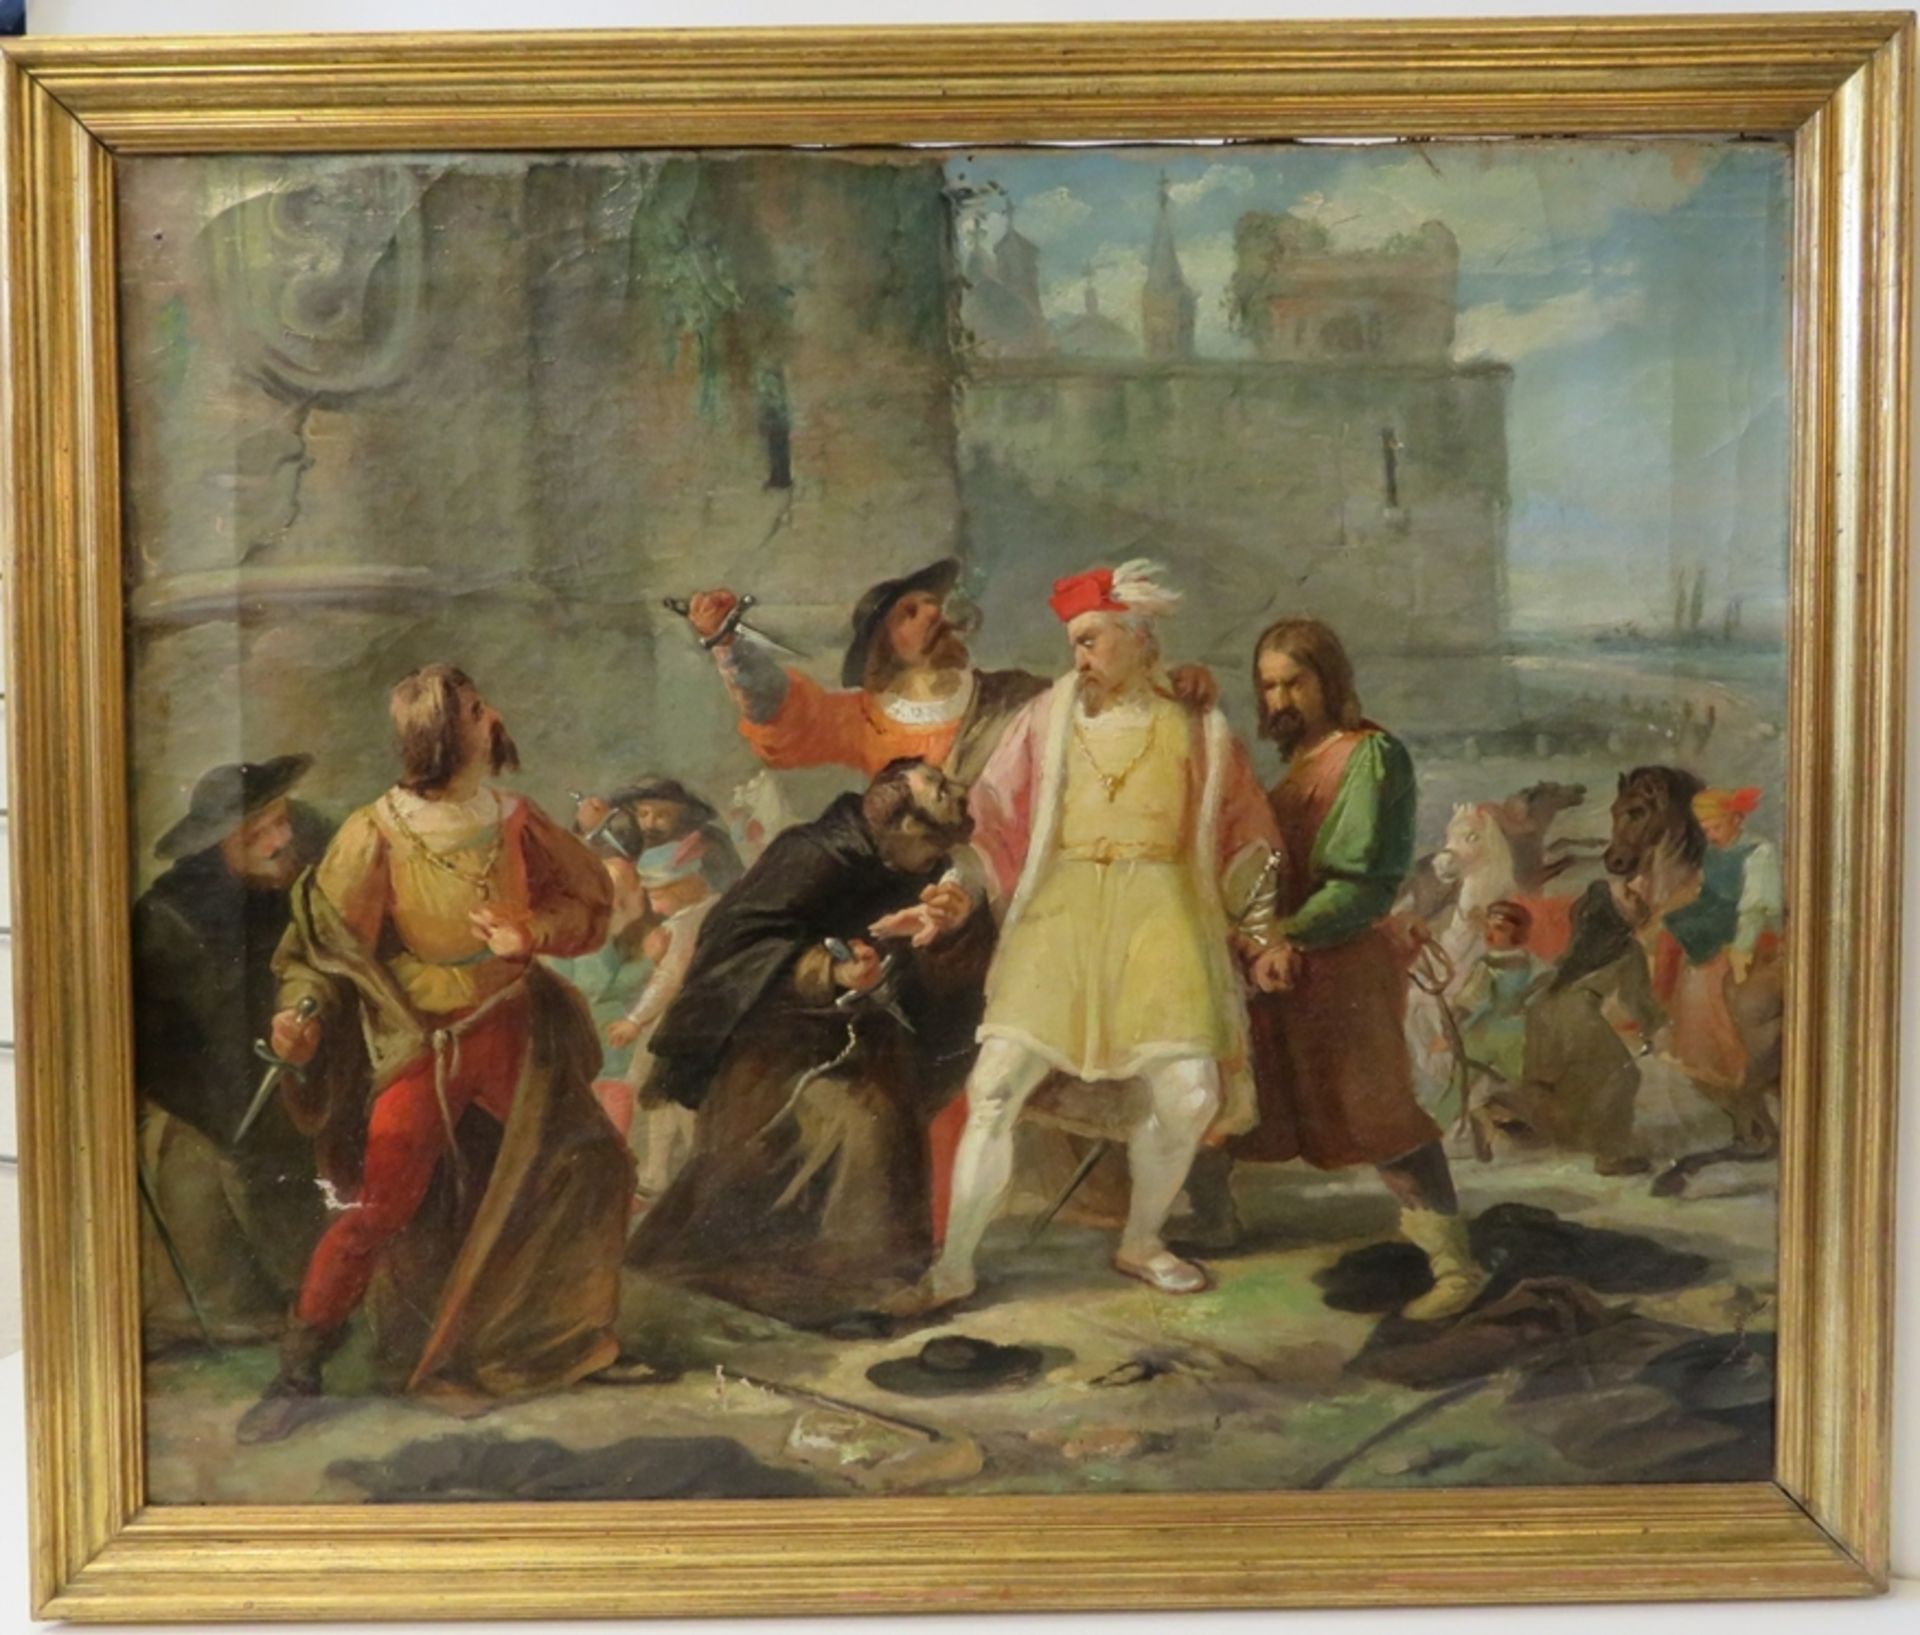 Unbekannt, 19. Jahrhundert, "Mittelalterliche Szene", Öl/Leinwand, 59 x 72 cm, R. [68,5 x 81 cm]